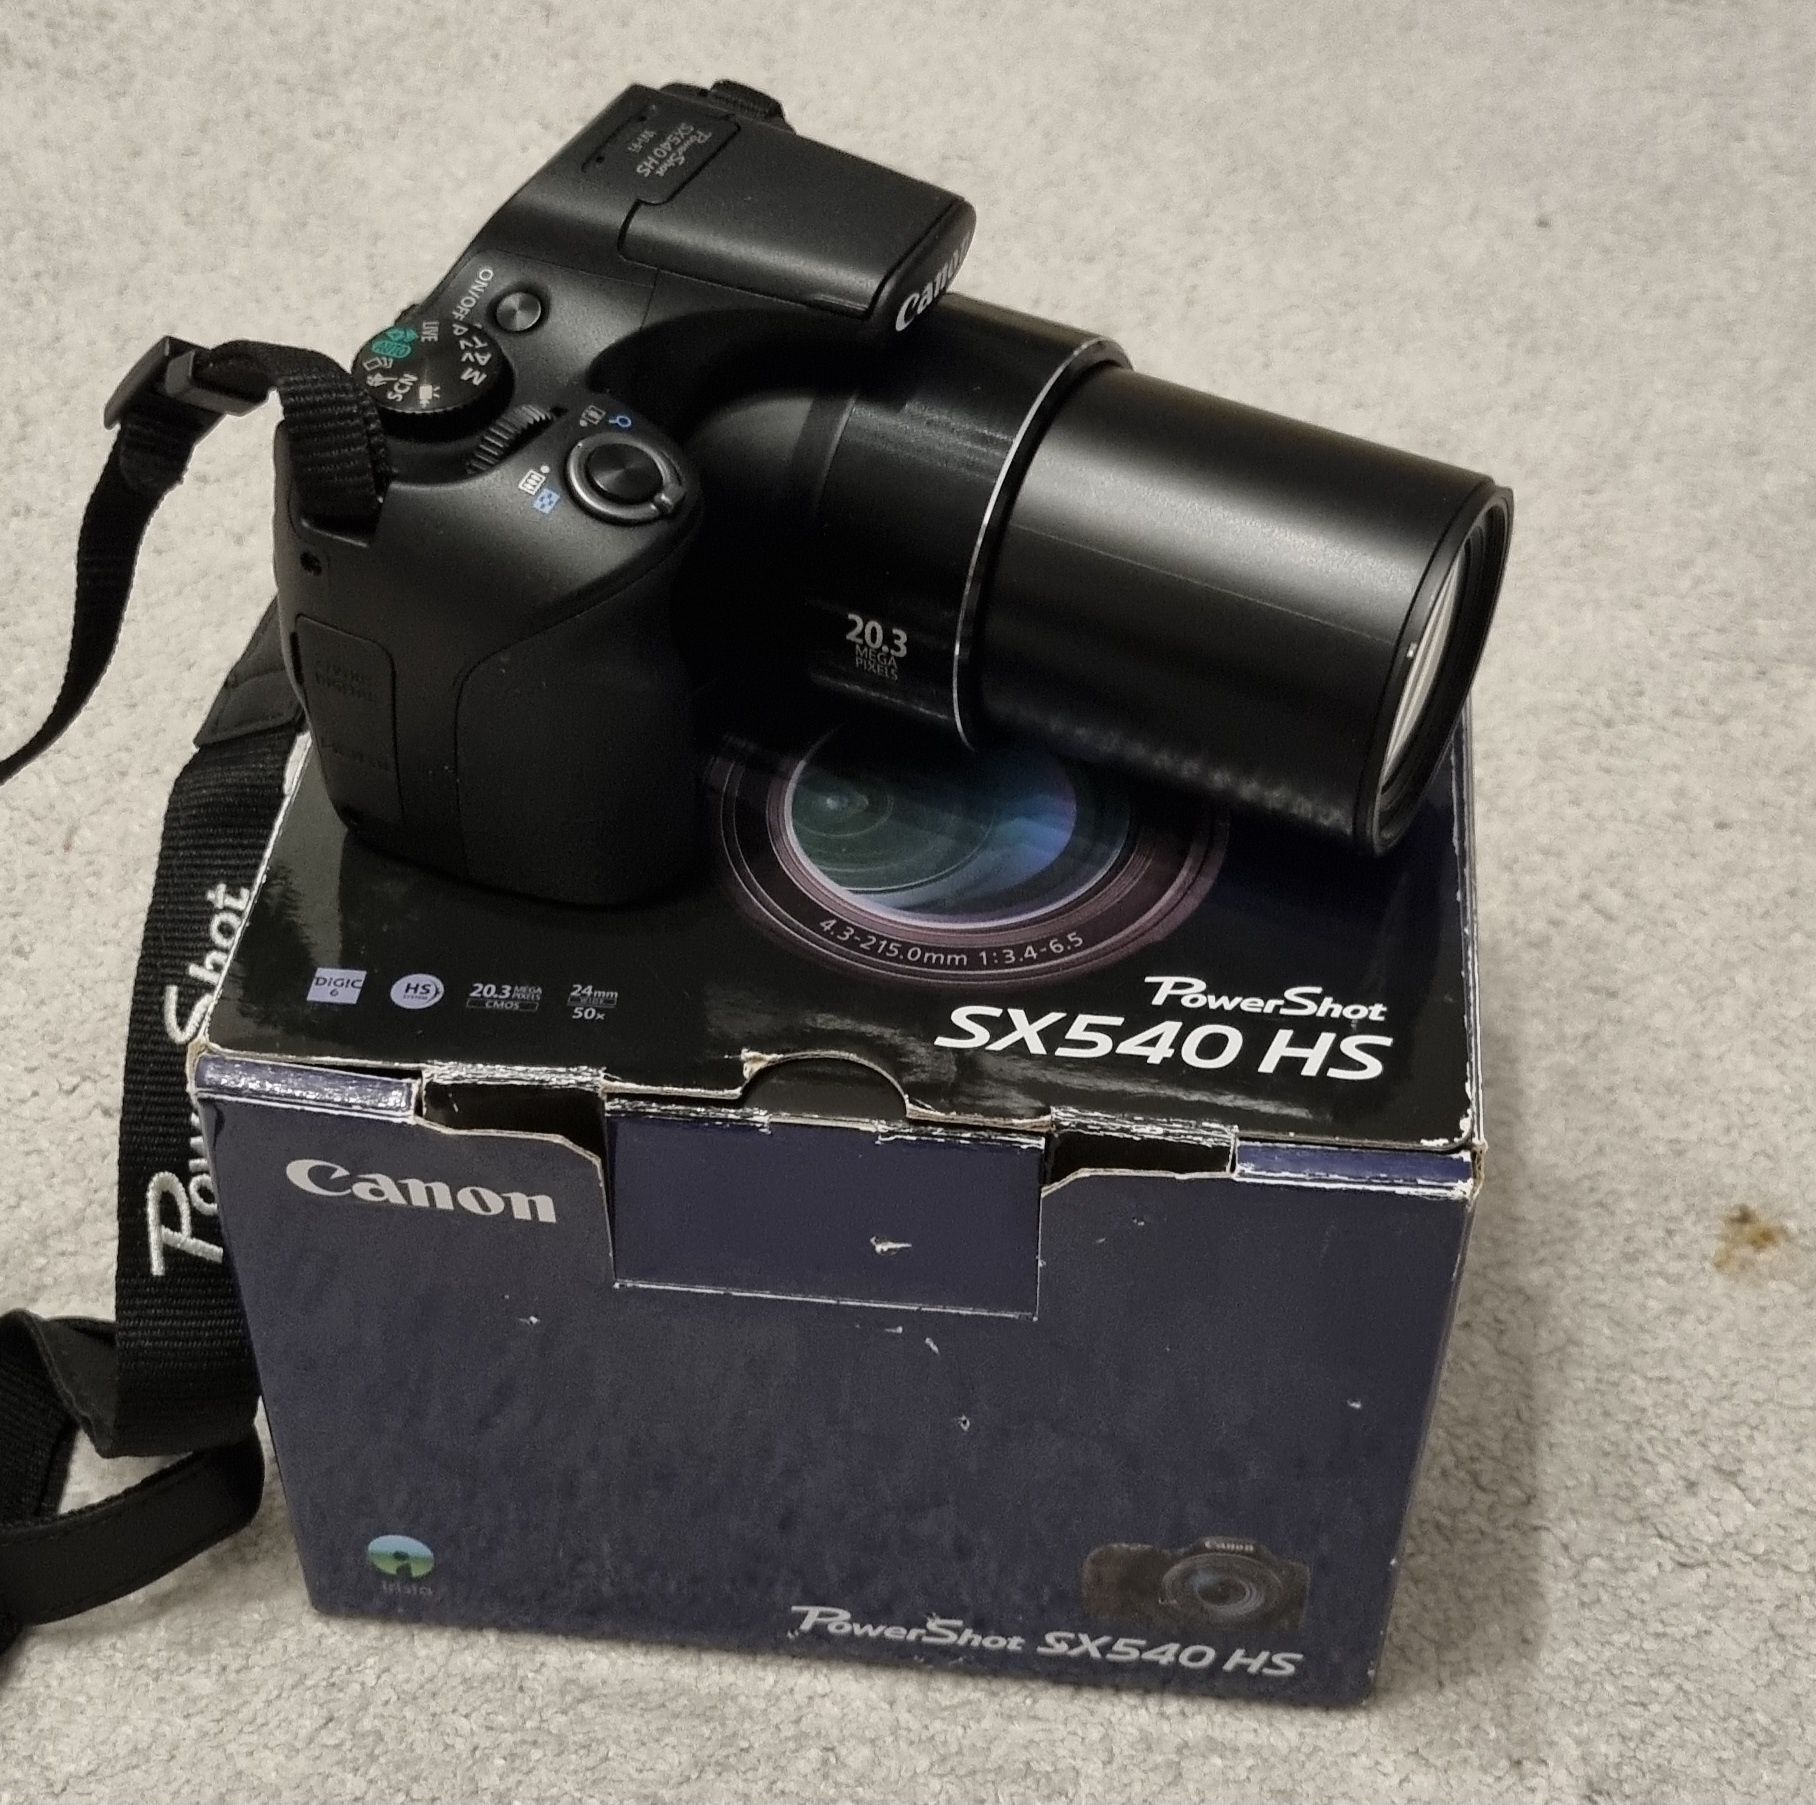 Canon sx540 hs Power Shot